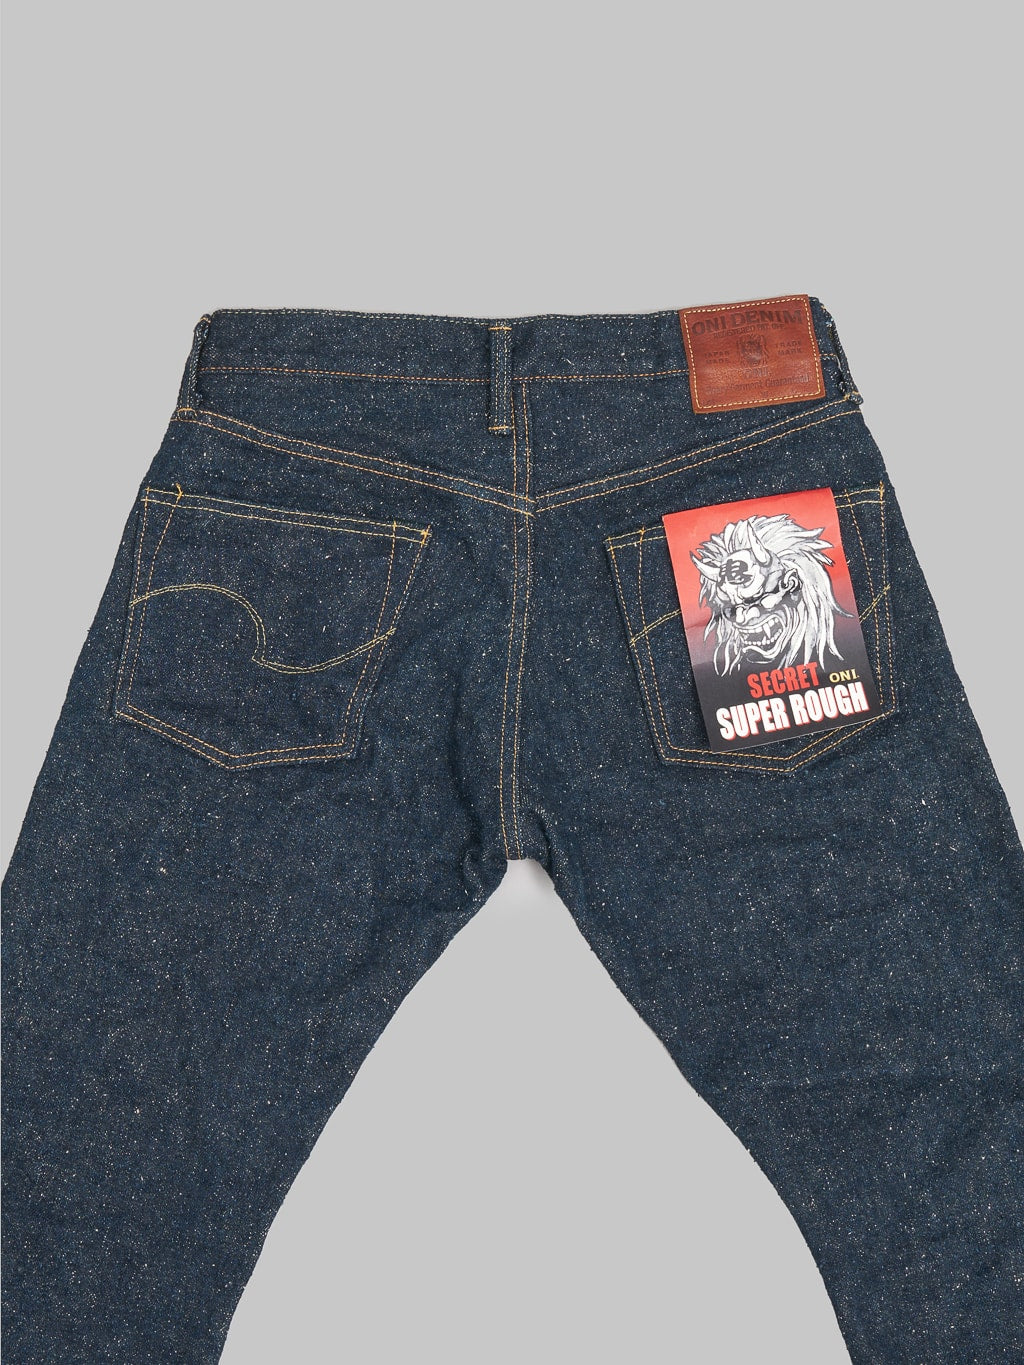 ONI Denim 246SESR Secret Super Rough Neat Straight selvedge Jeans back pockets